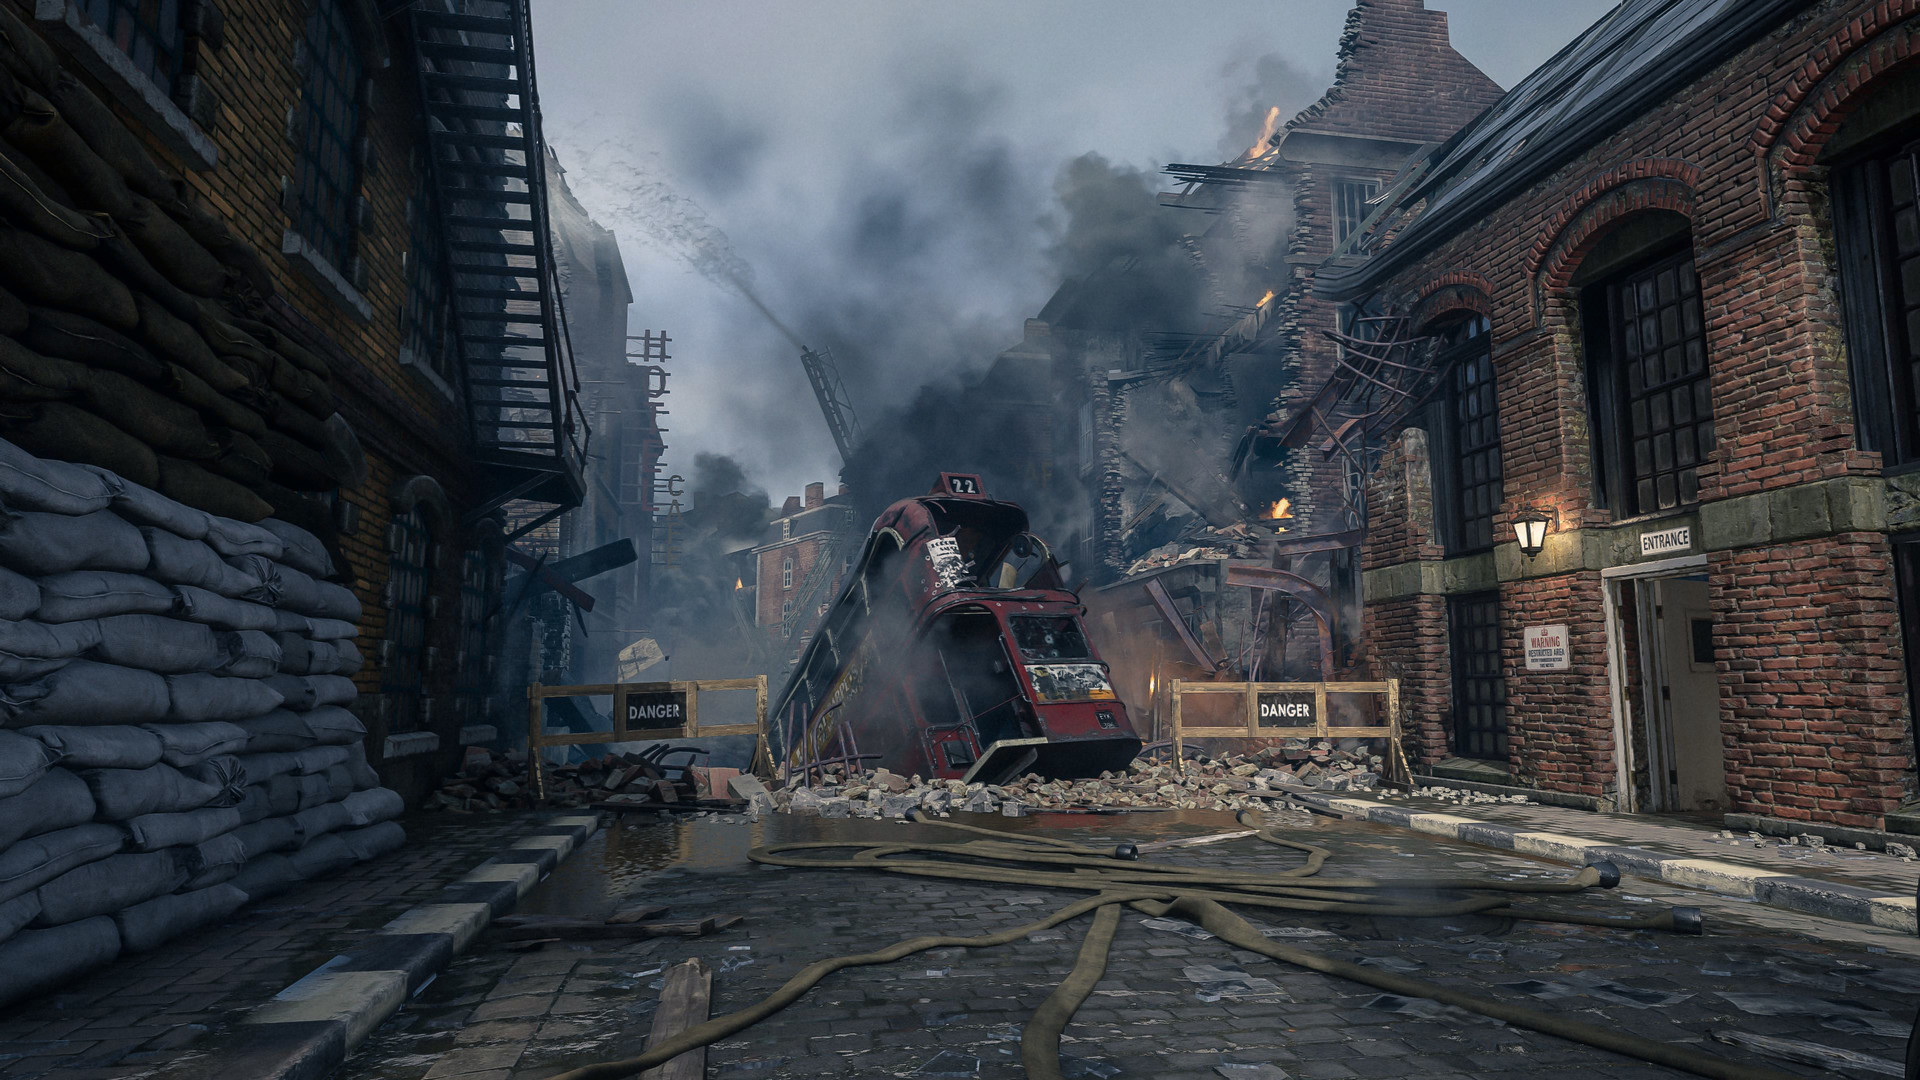 David Henchey - Call of Duty: WWII - London Docks